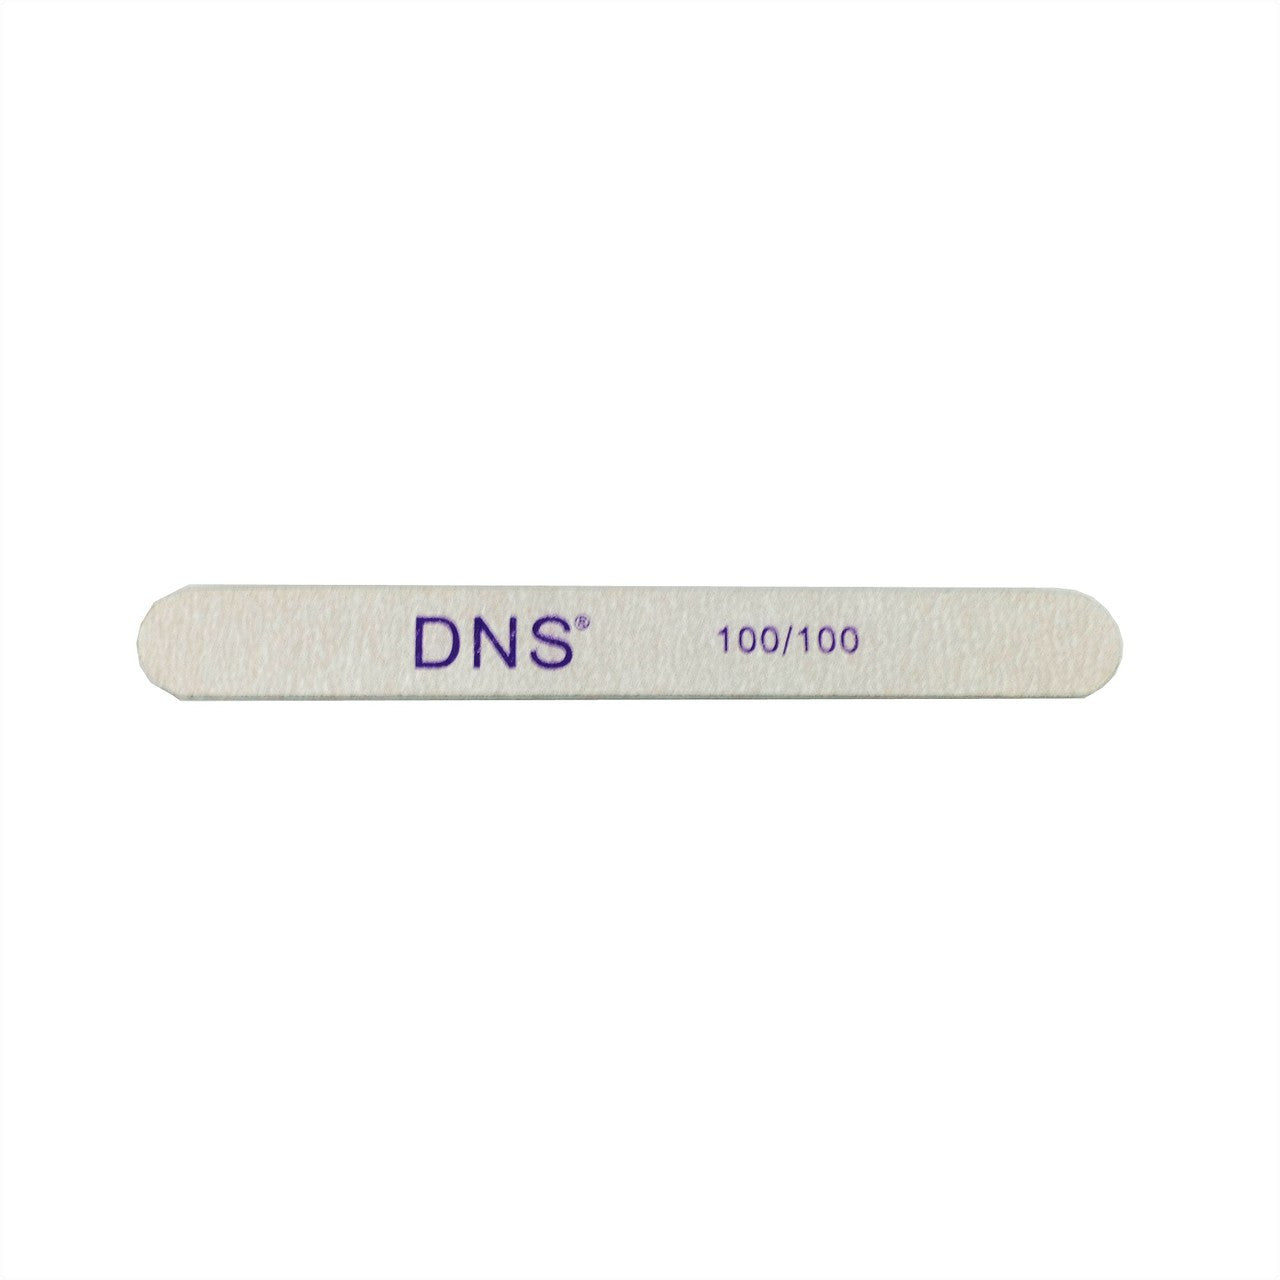 DNS File 100/100 Diamond Nail Supplies